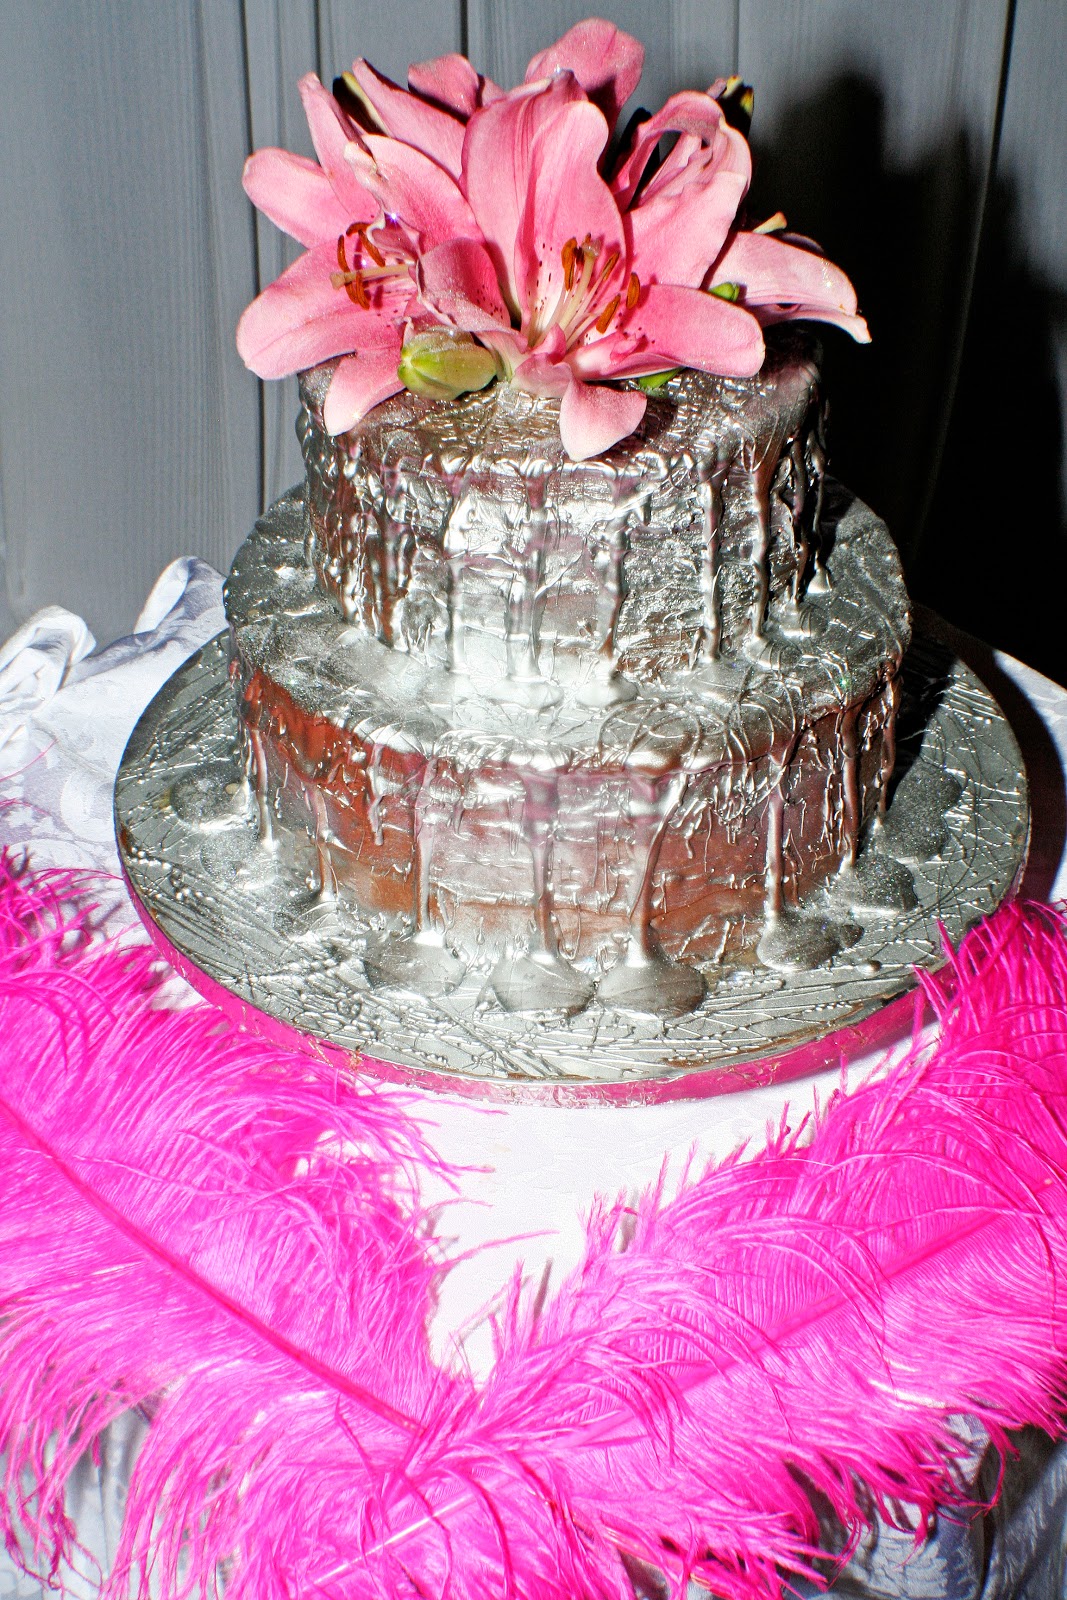 I made this wedding cake for